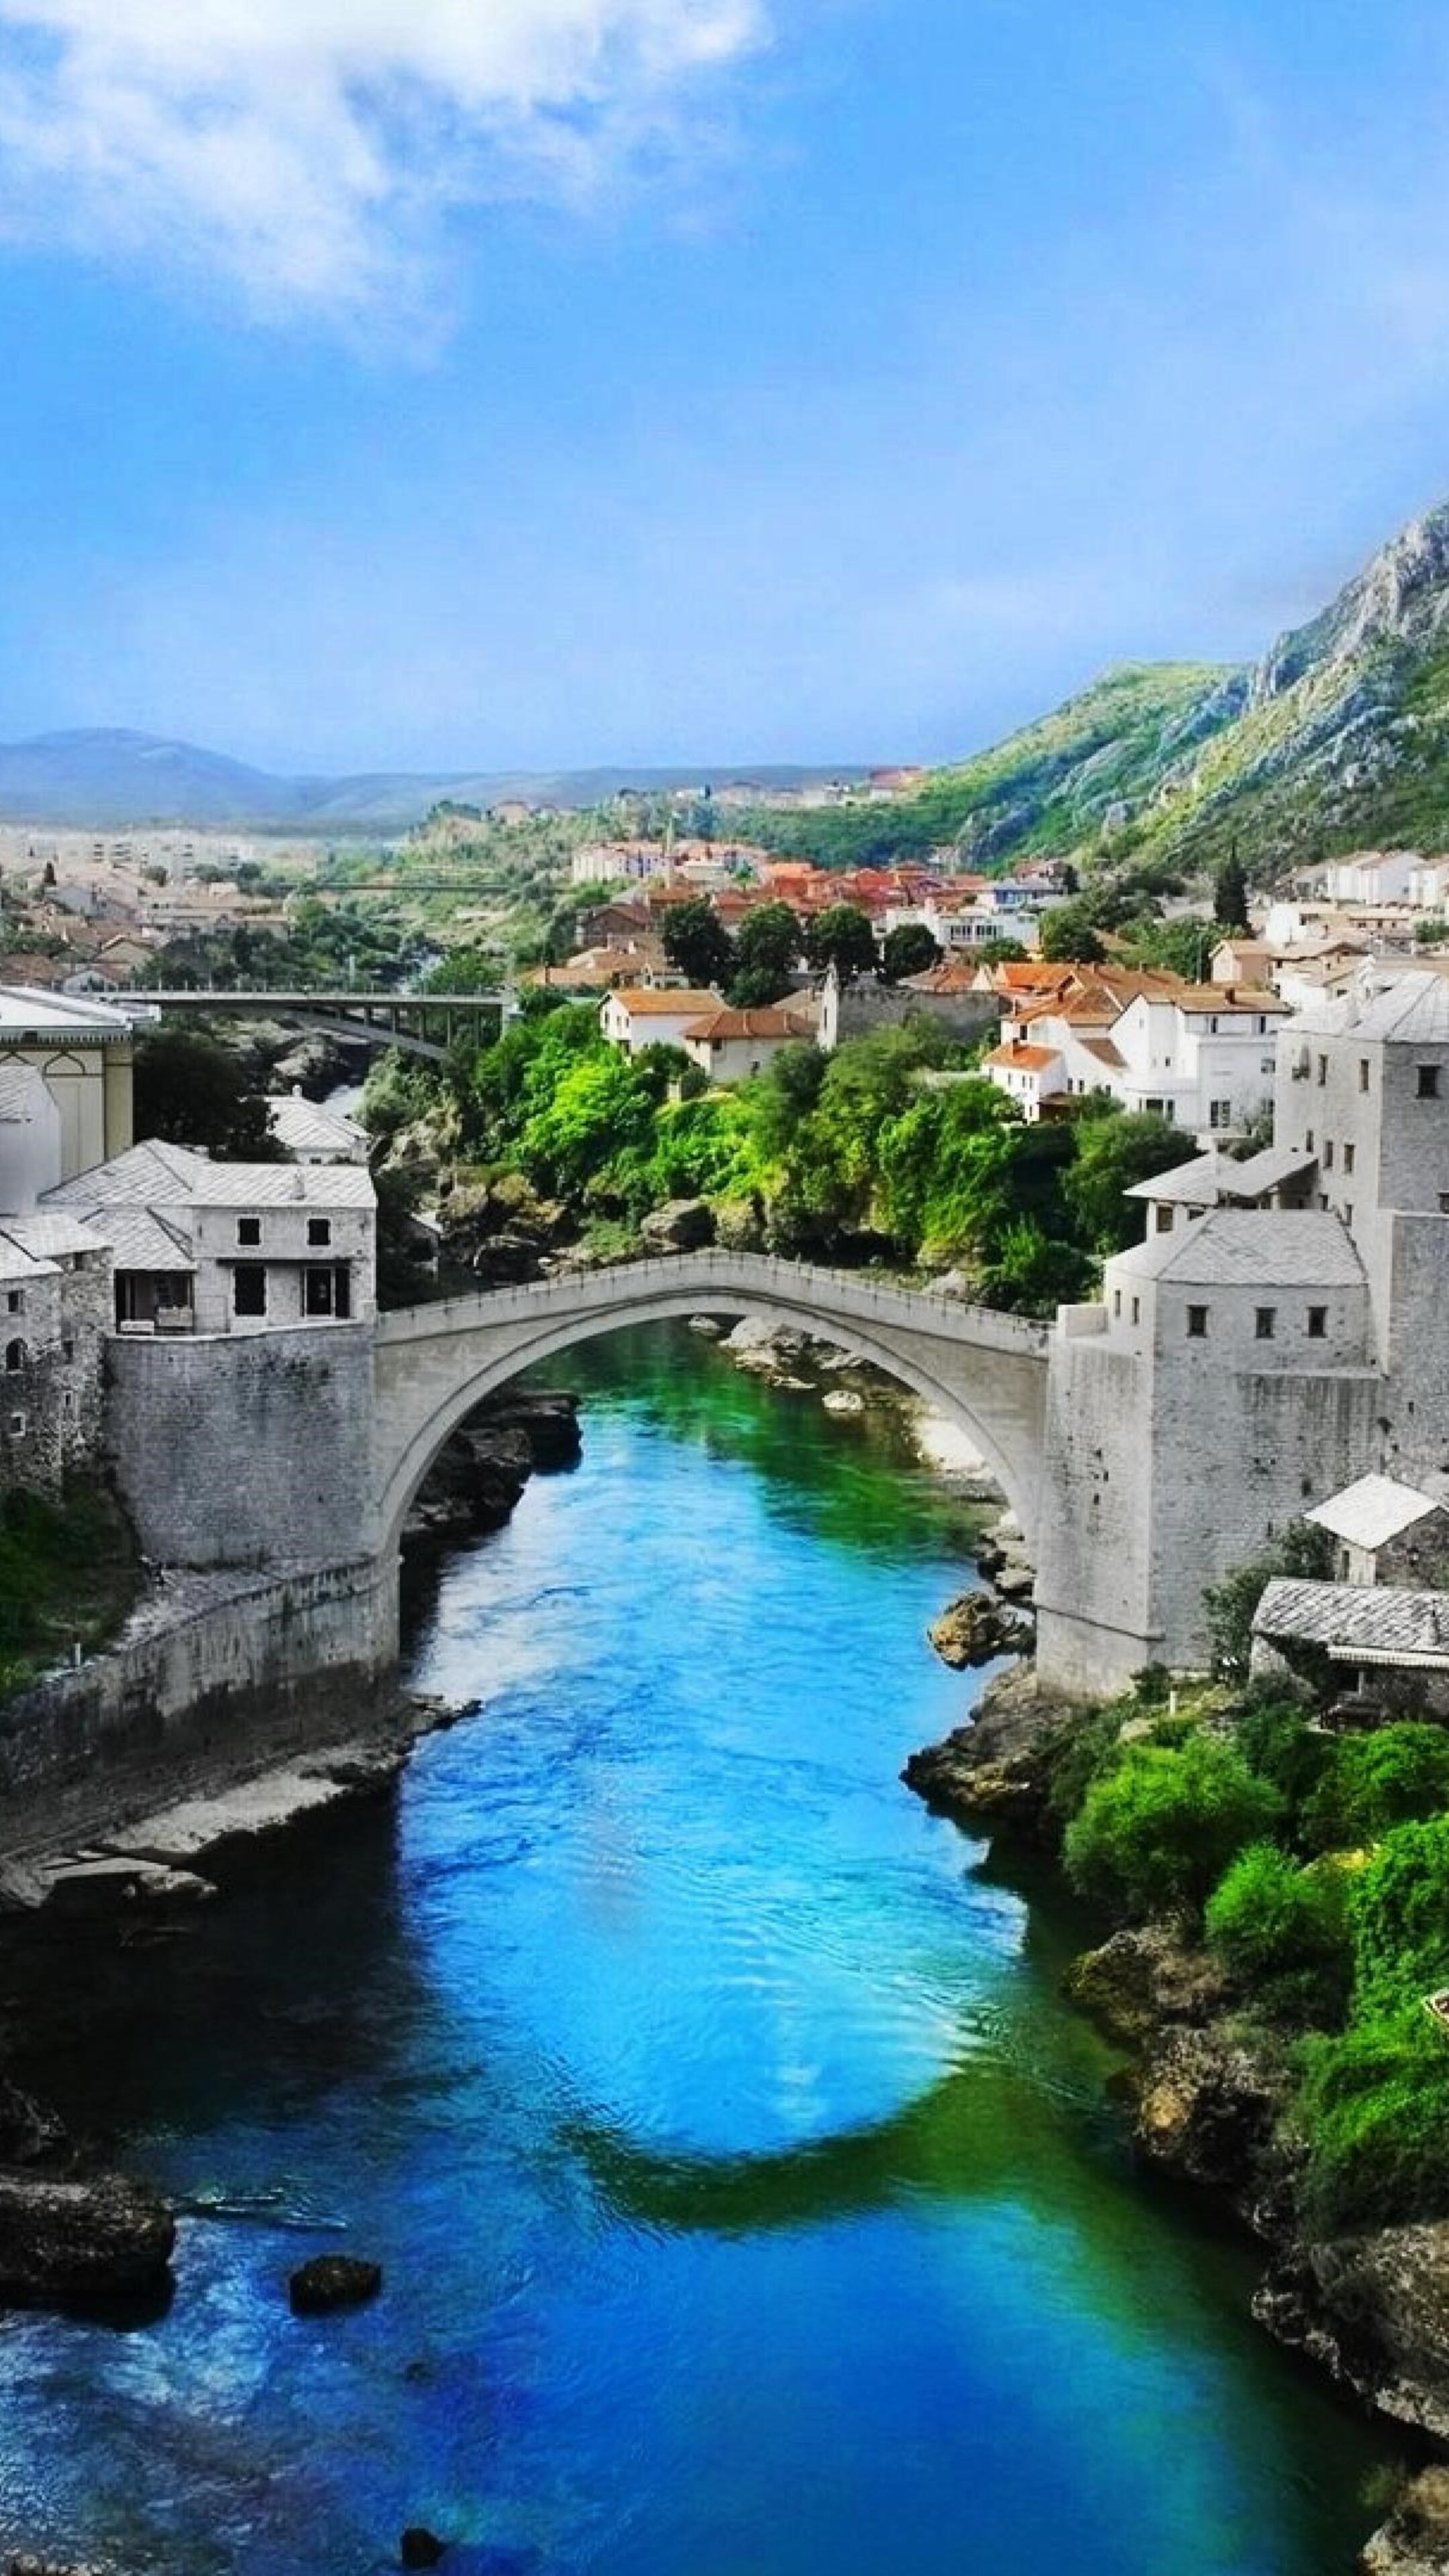 Bridge: Stari Most, A rebuilt 16th-century Ottoman span in the city of Mostar in Bosnia and Herzegovina. 2160x3840 4K Wallpaper.